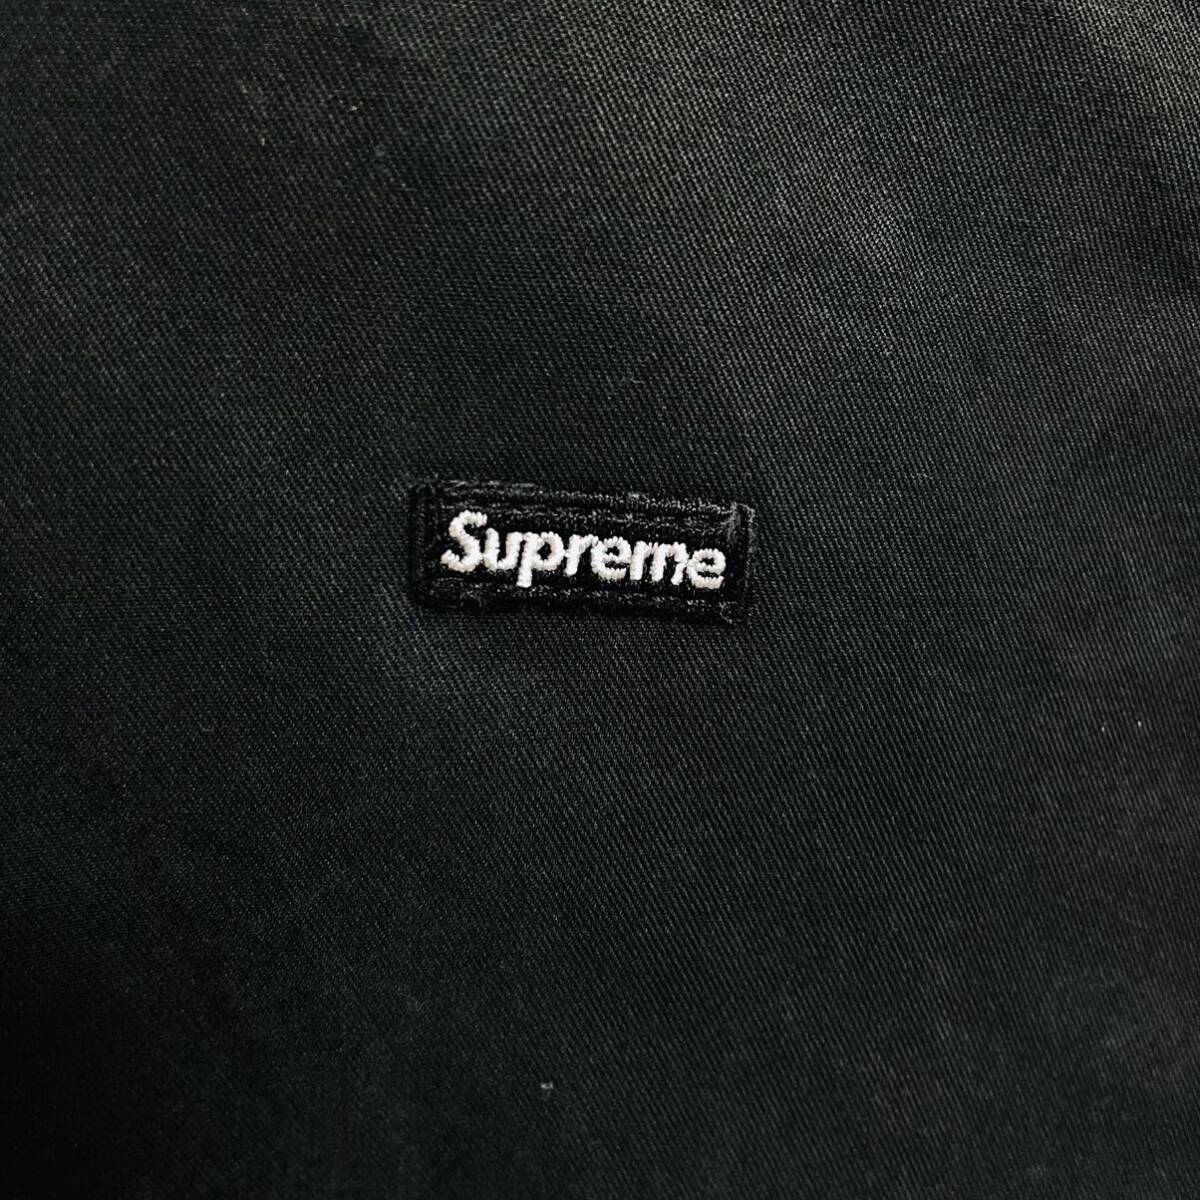 Supreme Small Box Logo Shirt Black XL 22aw 2022年 黒 ブラック スモール ボックスロゴ シャツ 胸ロゴ_画像3